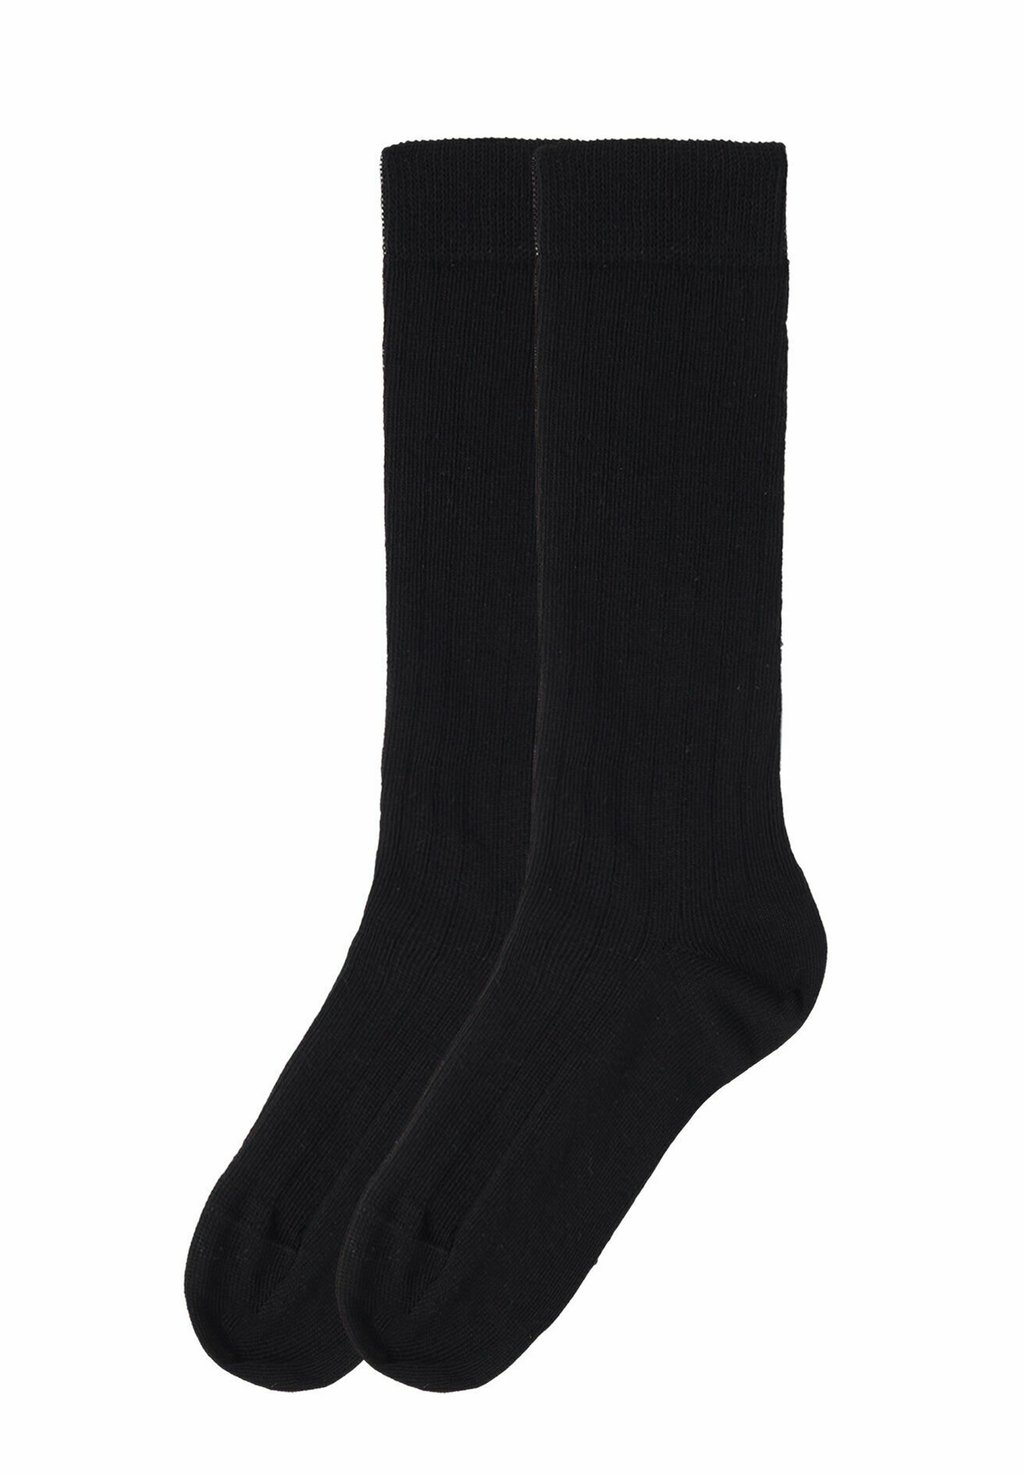 Носки Tezenis, черный носки unisex tezenis черный металлик